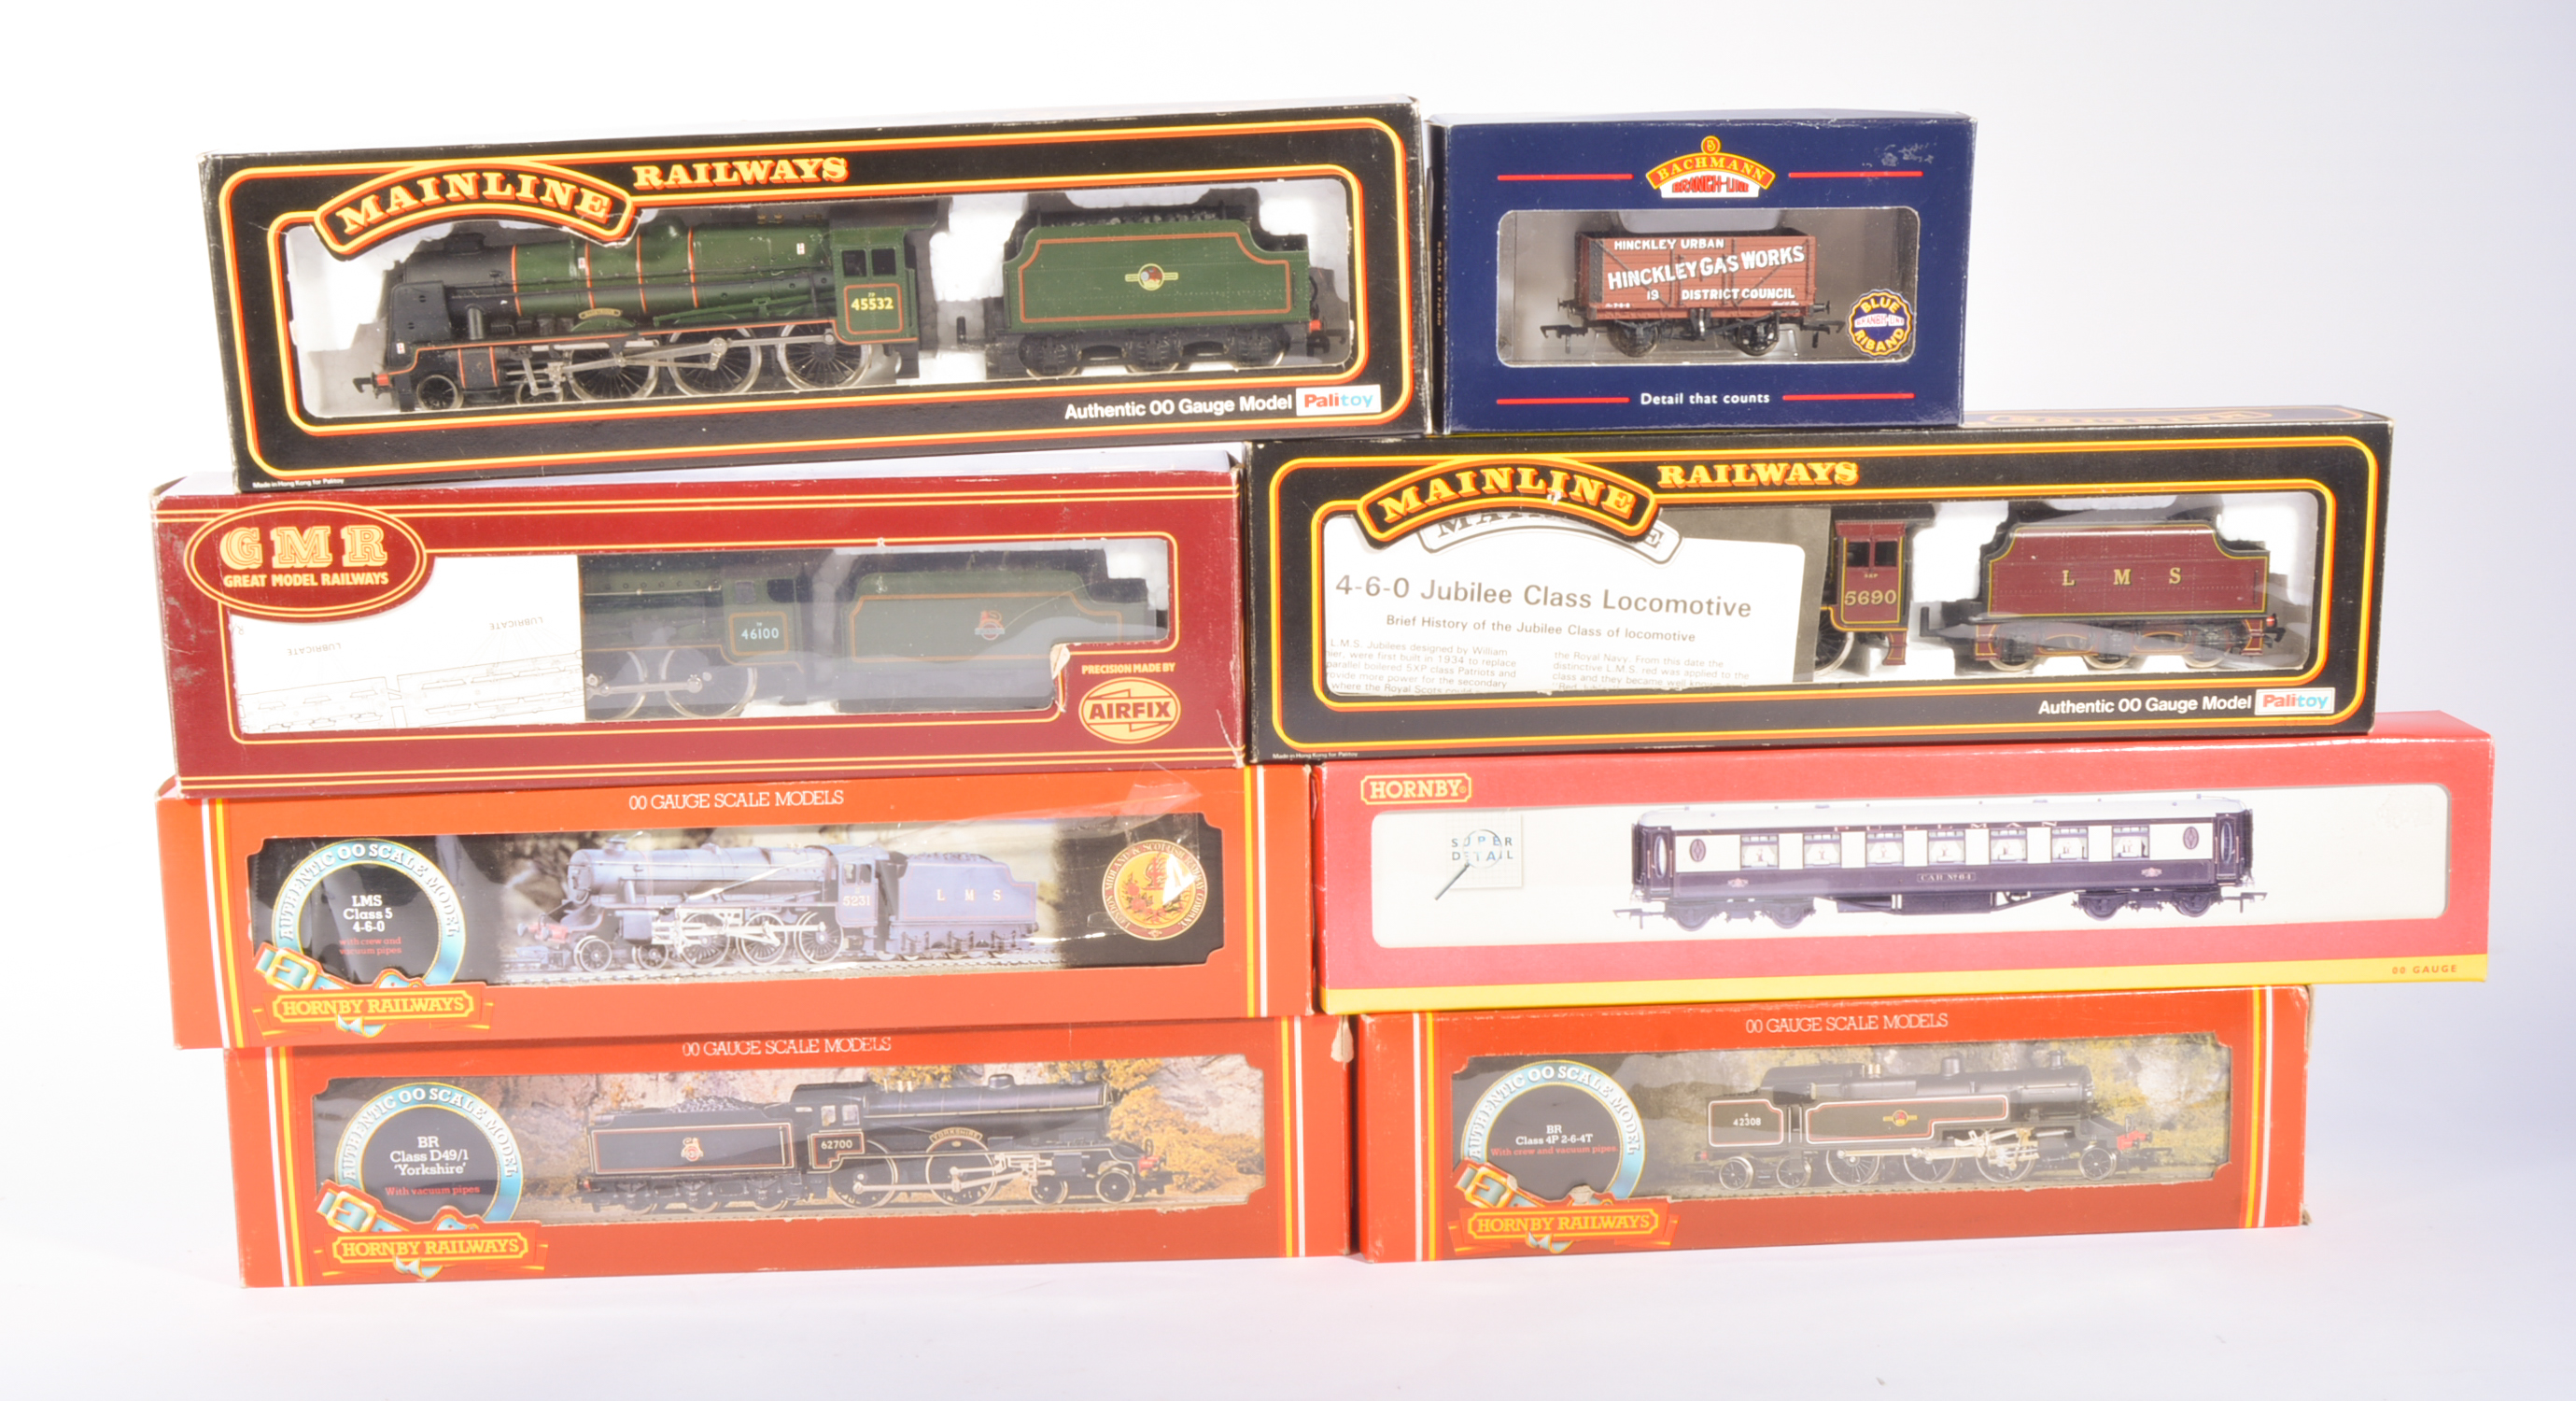 00 gauge railway locomotives, Hornby R.062 BR Class 4P 2-6-4 tank, R.